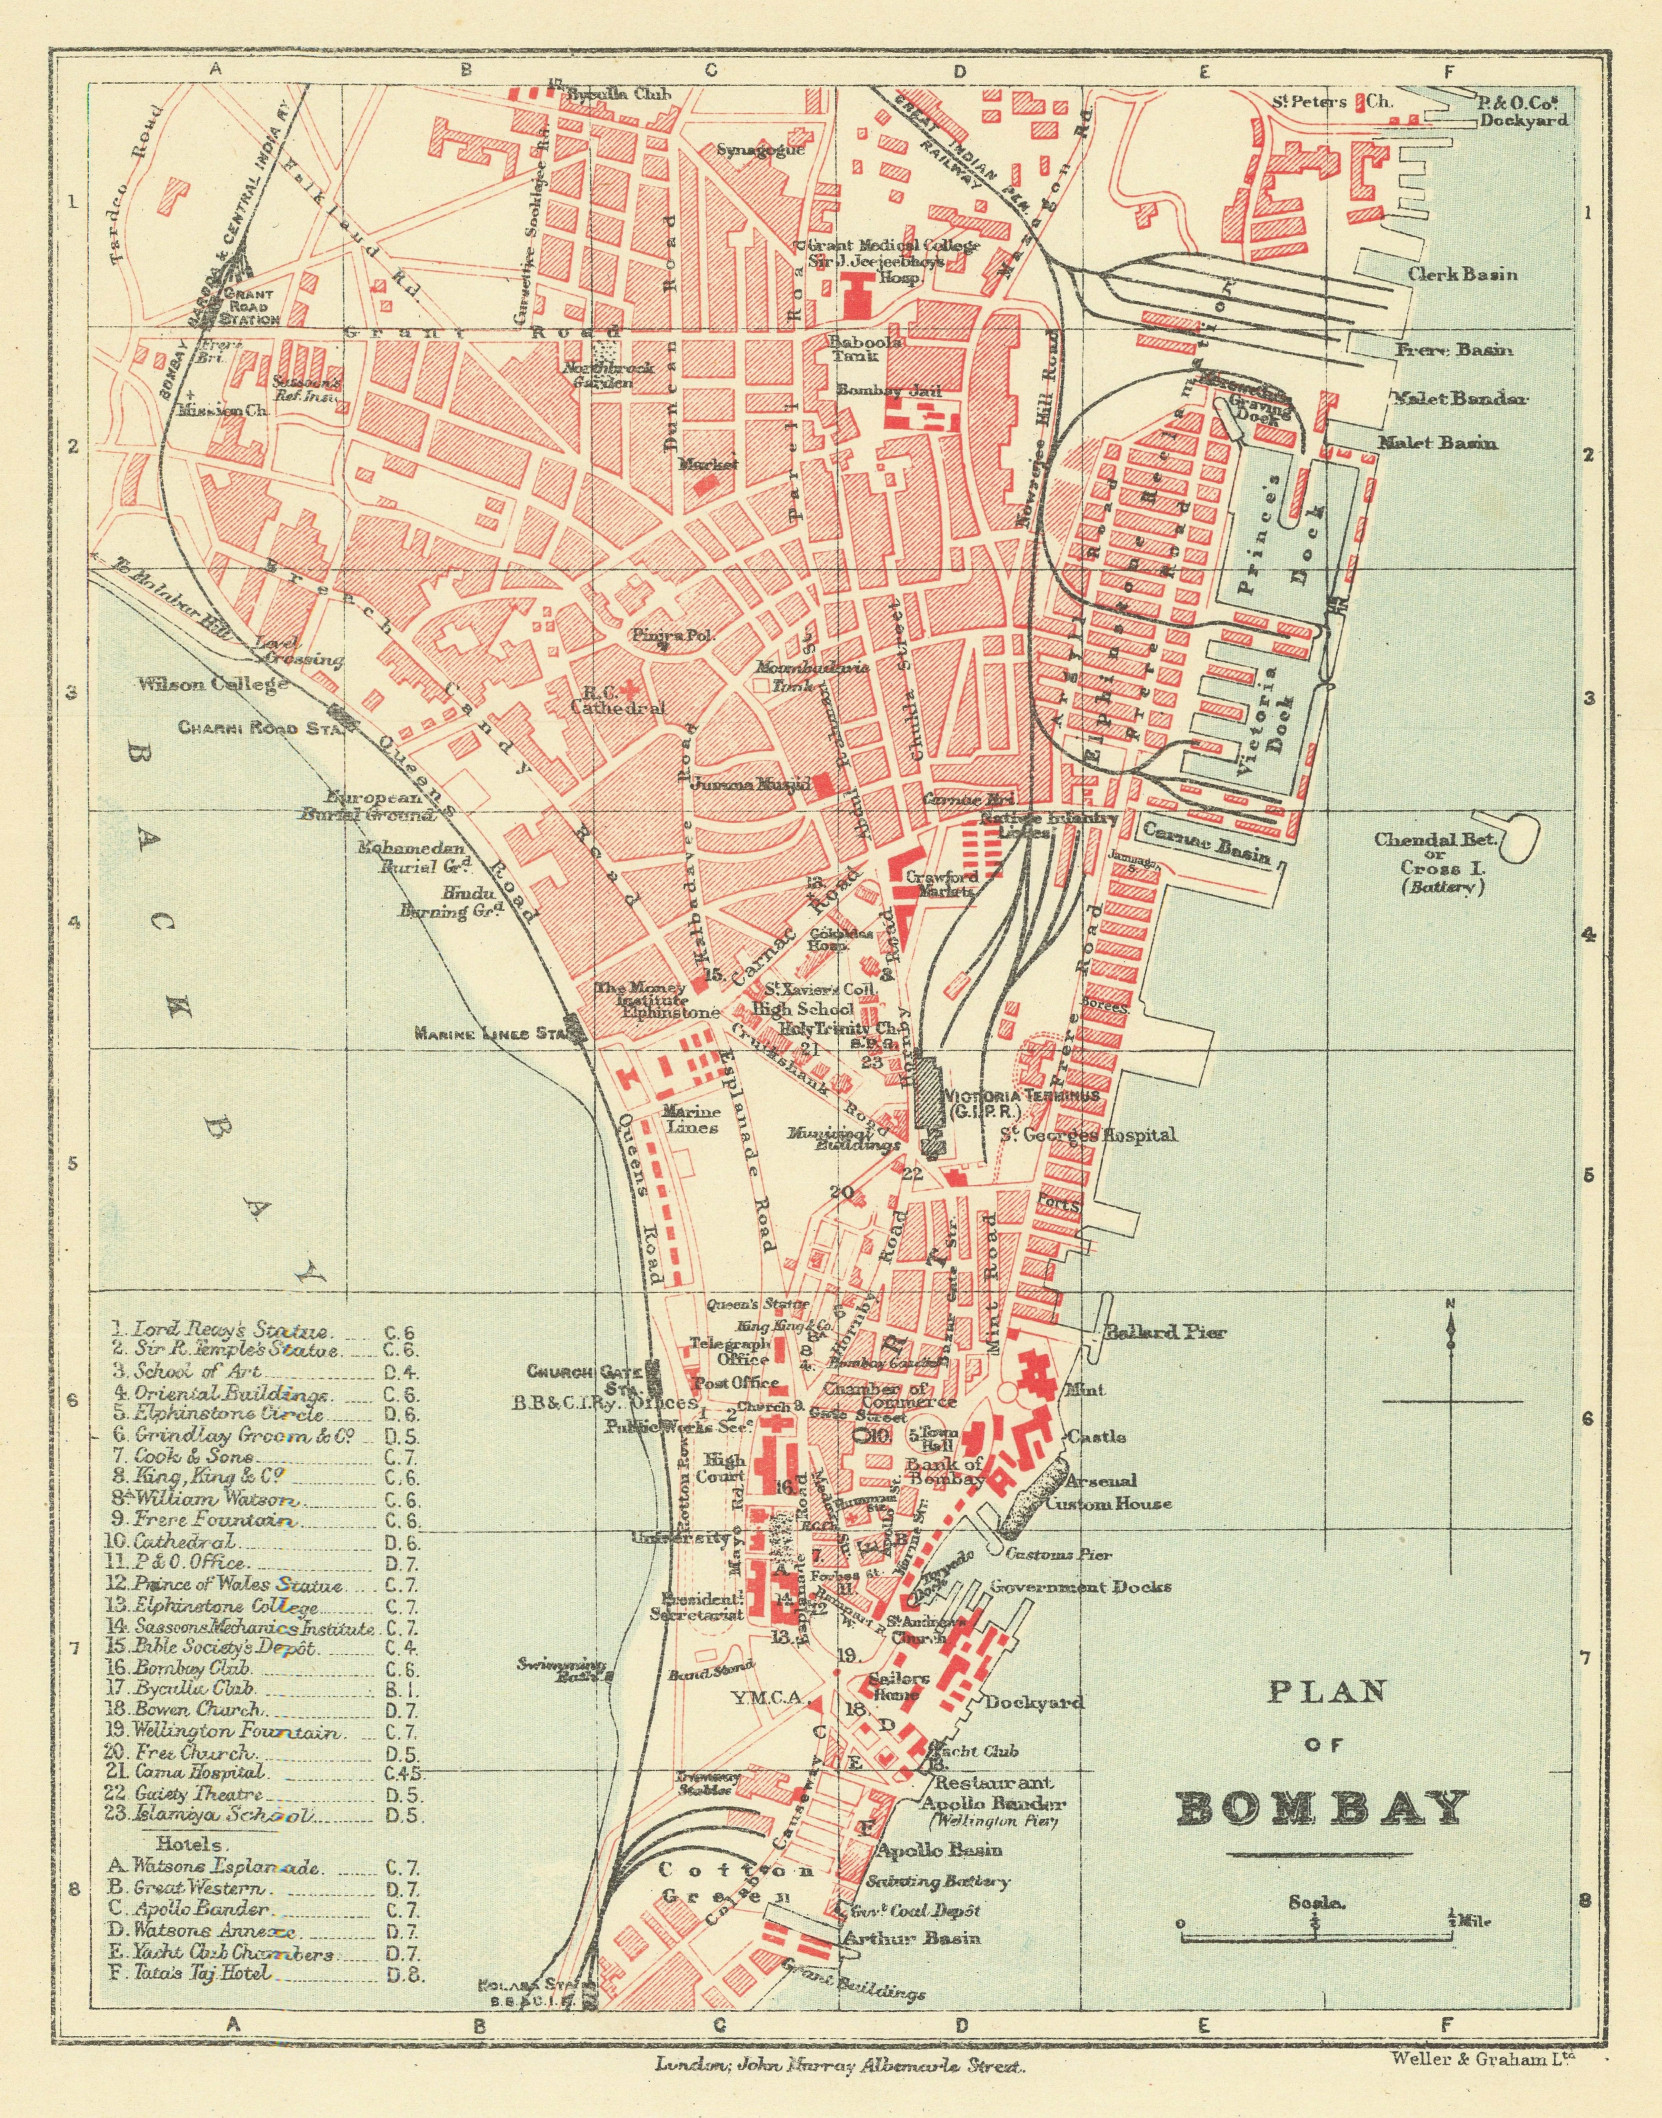 INDIA. Bombay (Mumbai) plan. Clubs schools hospitals theatres hotels 1905 map